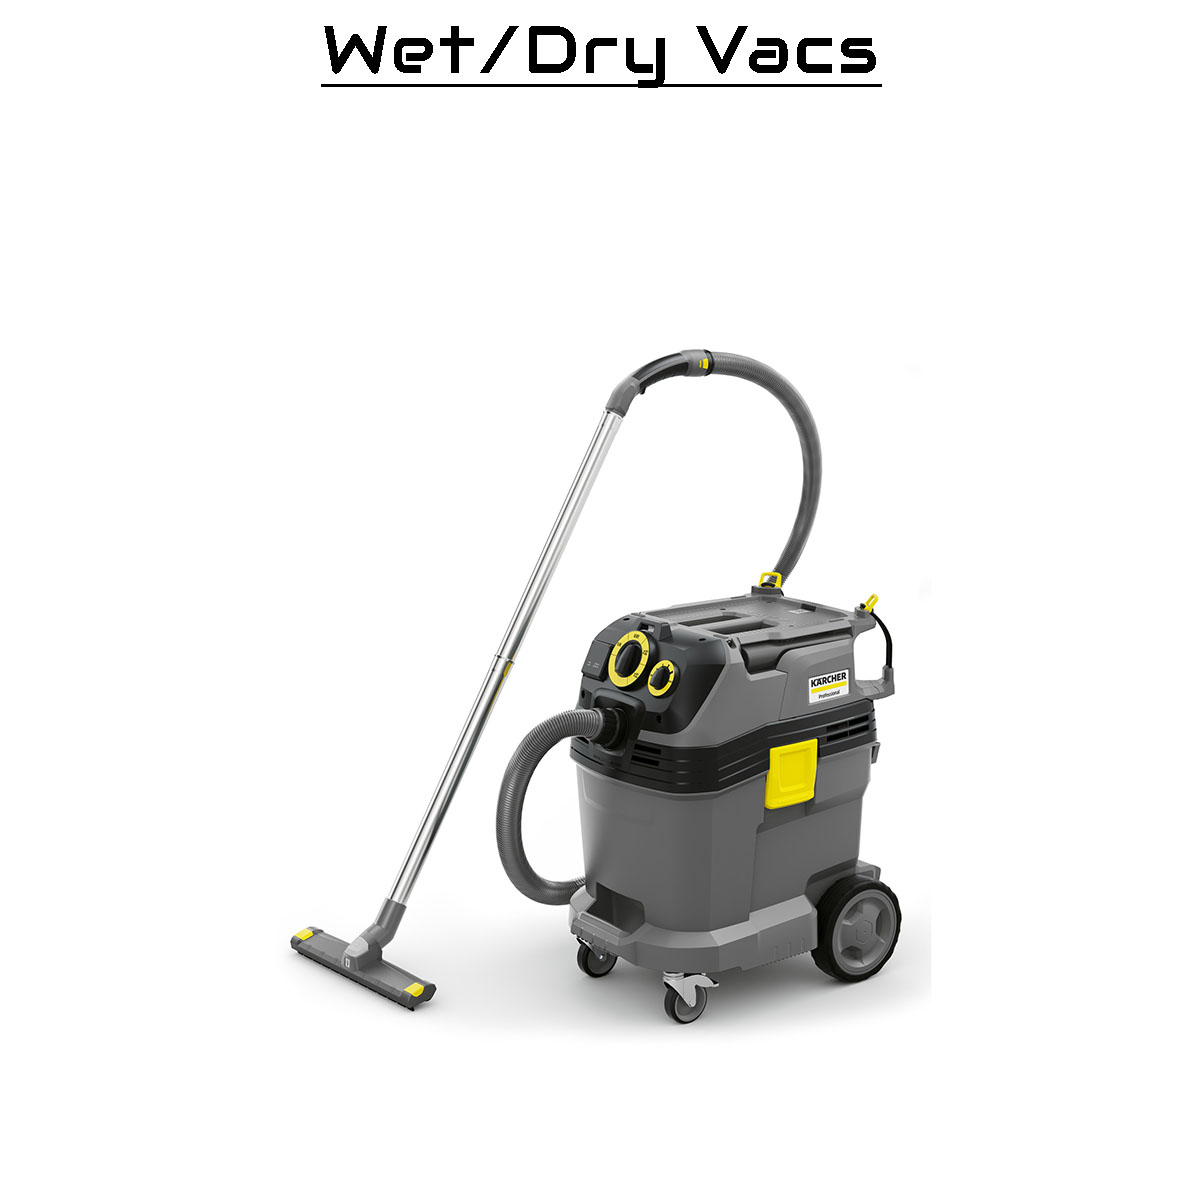 Wet/Dry Vacs